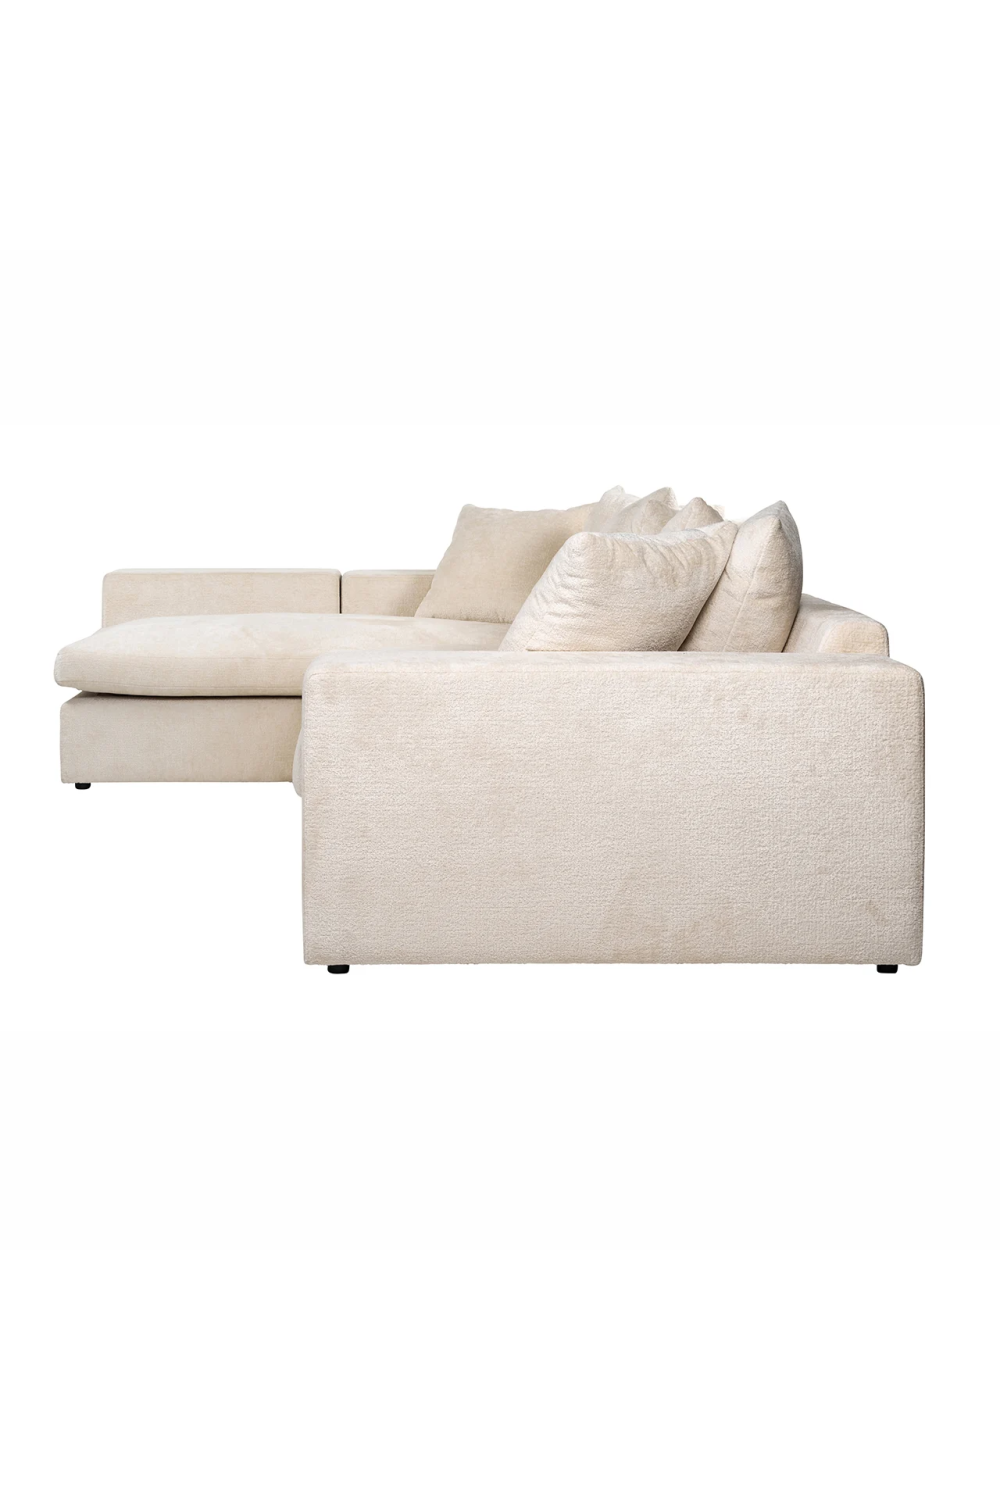 White Chenille Contemporary Sofa | OROA Alcazar | Oroa.com